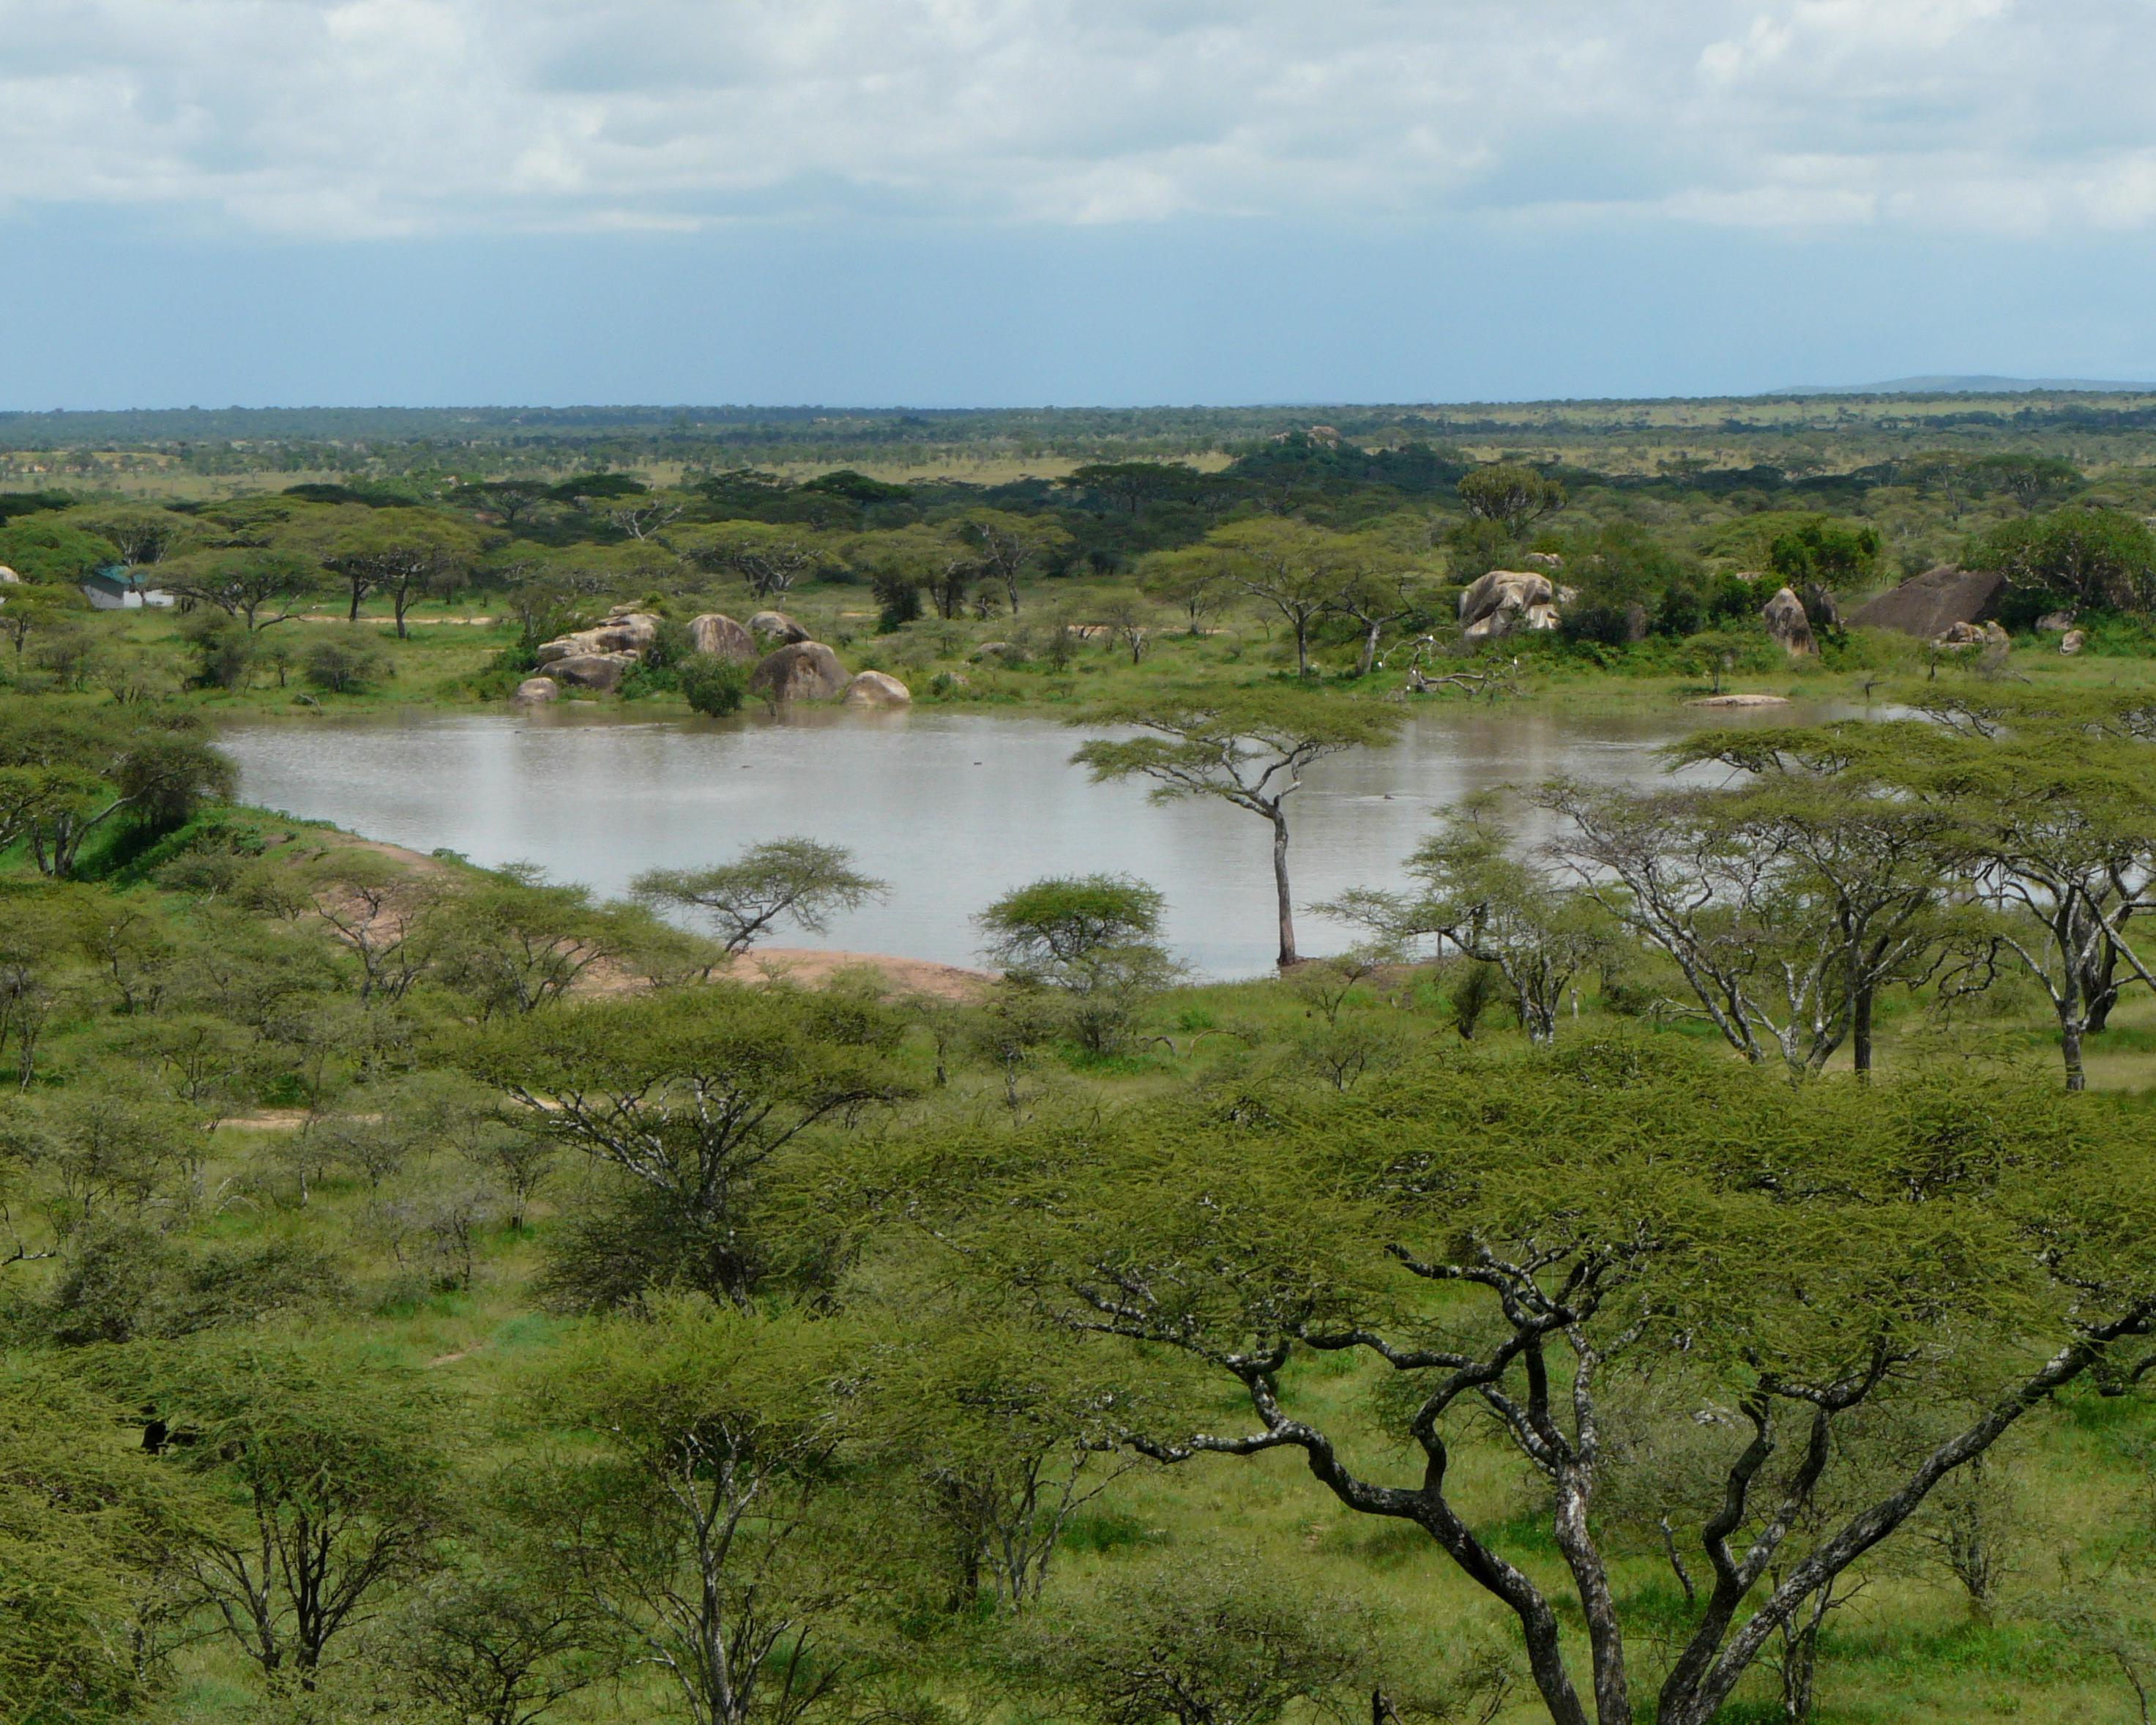 Seronera (Serengeti)